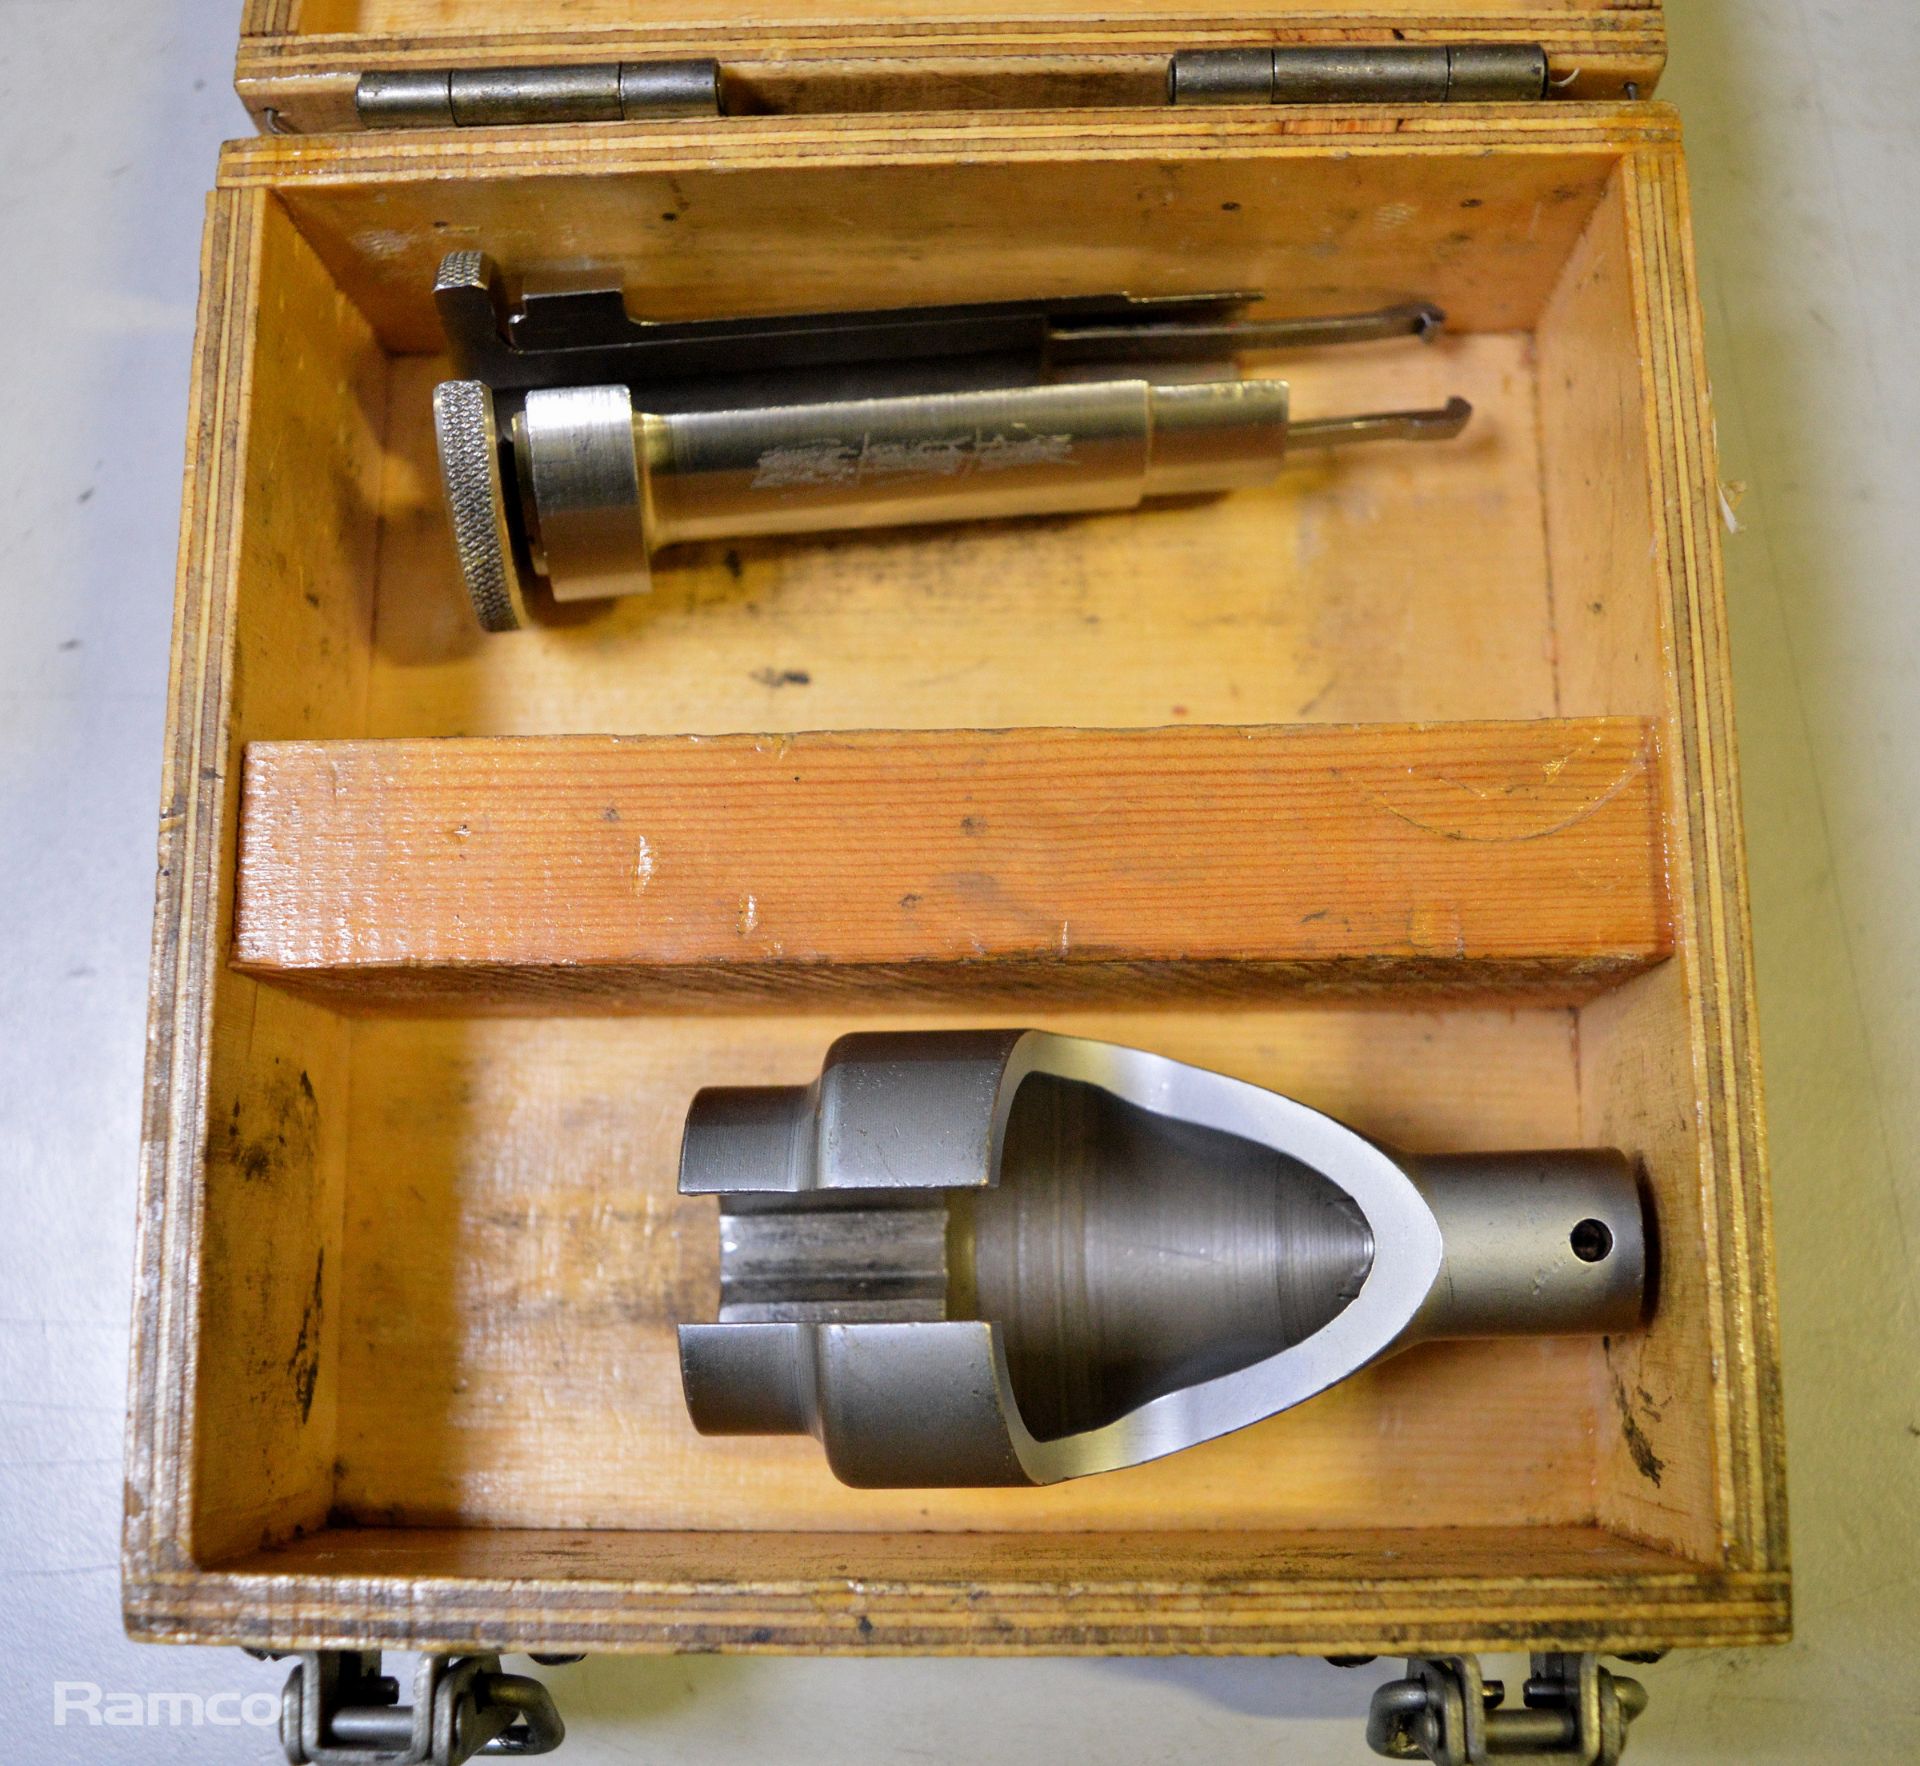 Optical Pyrometer Tool Kit In Wooden Box - Image 2 of 3